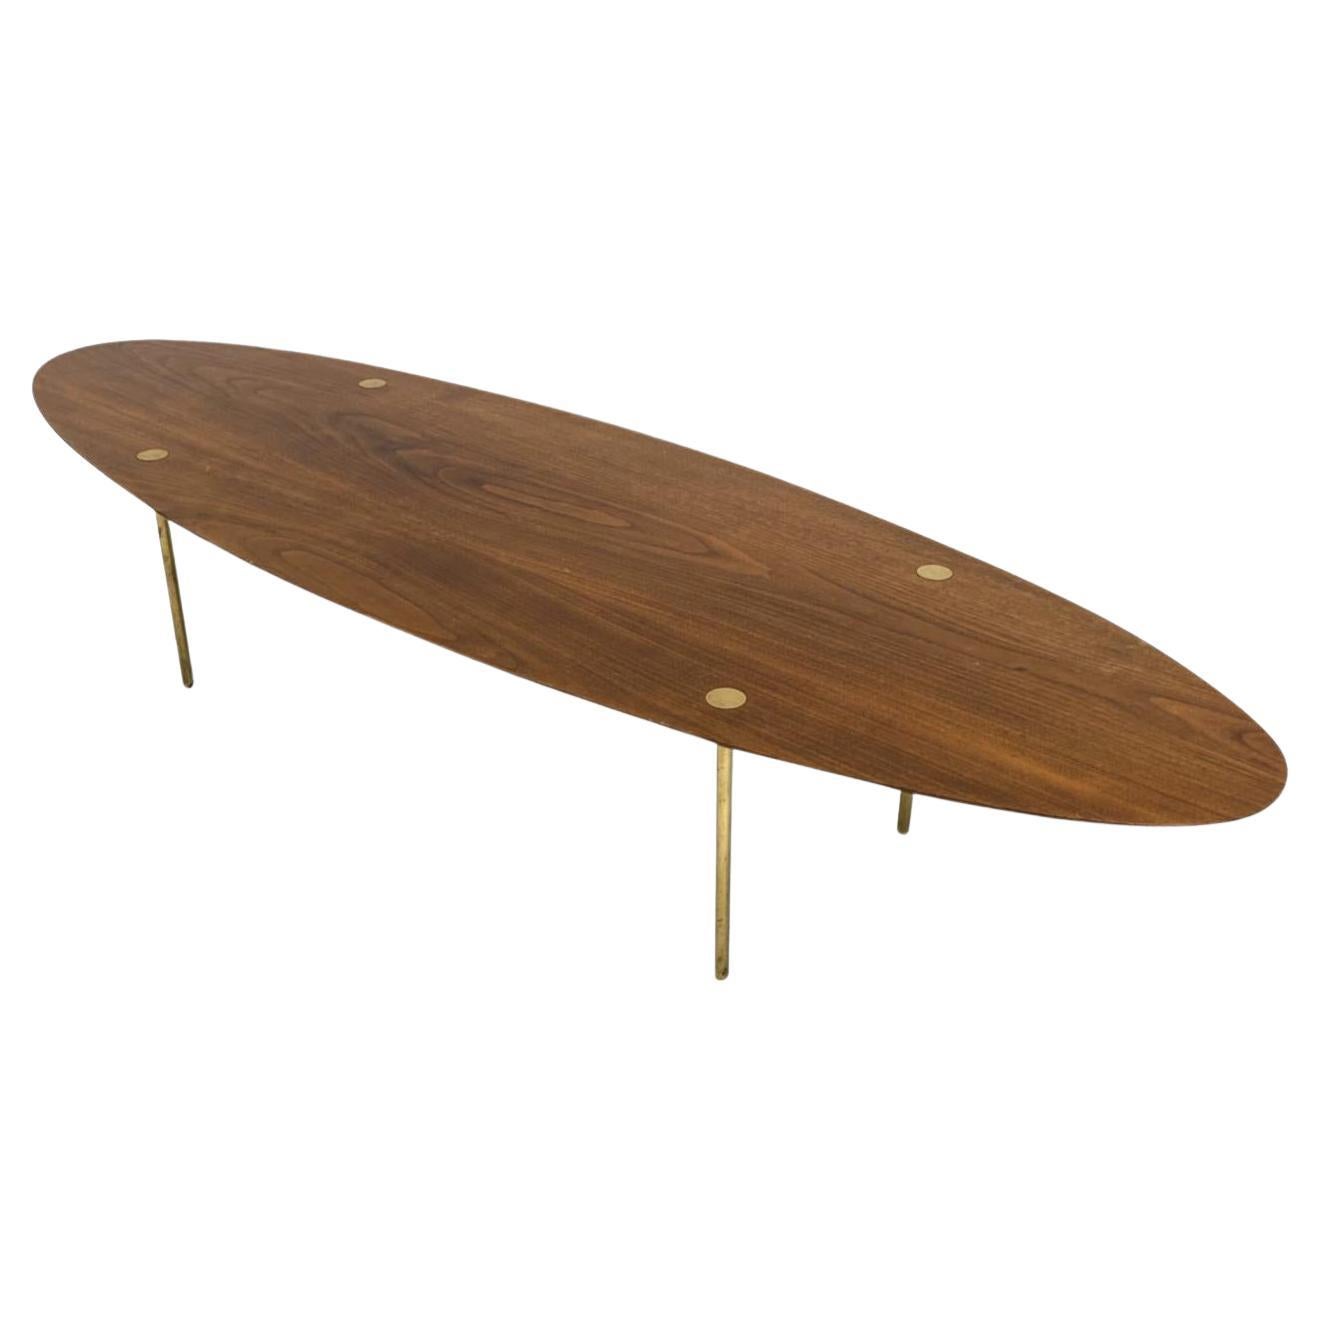 Walnut and Brass Surfboard coffee table